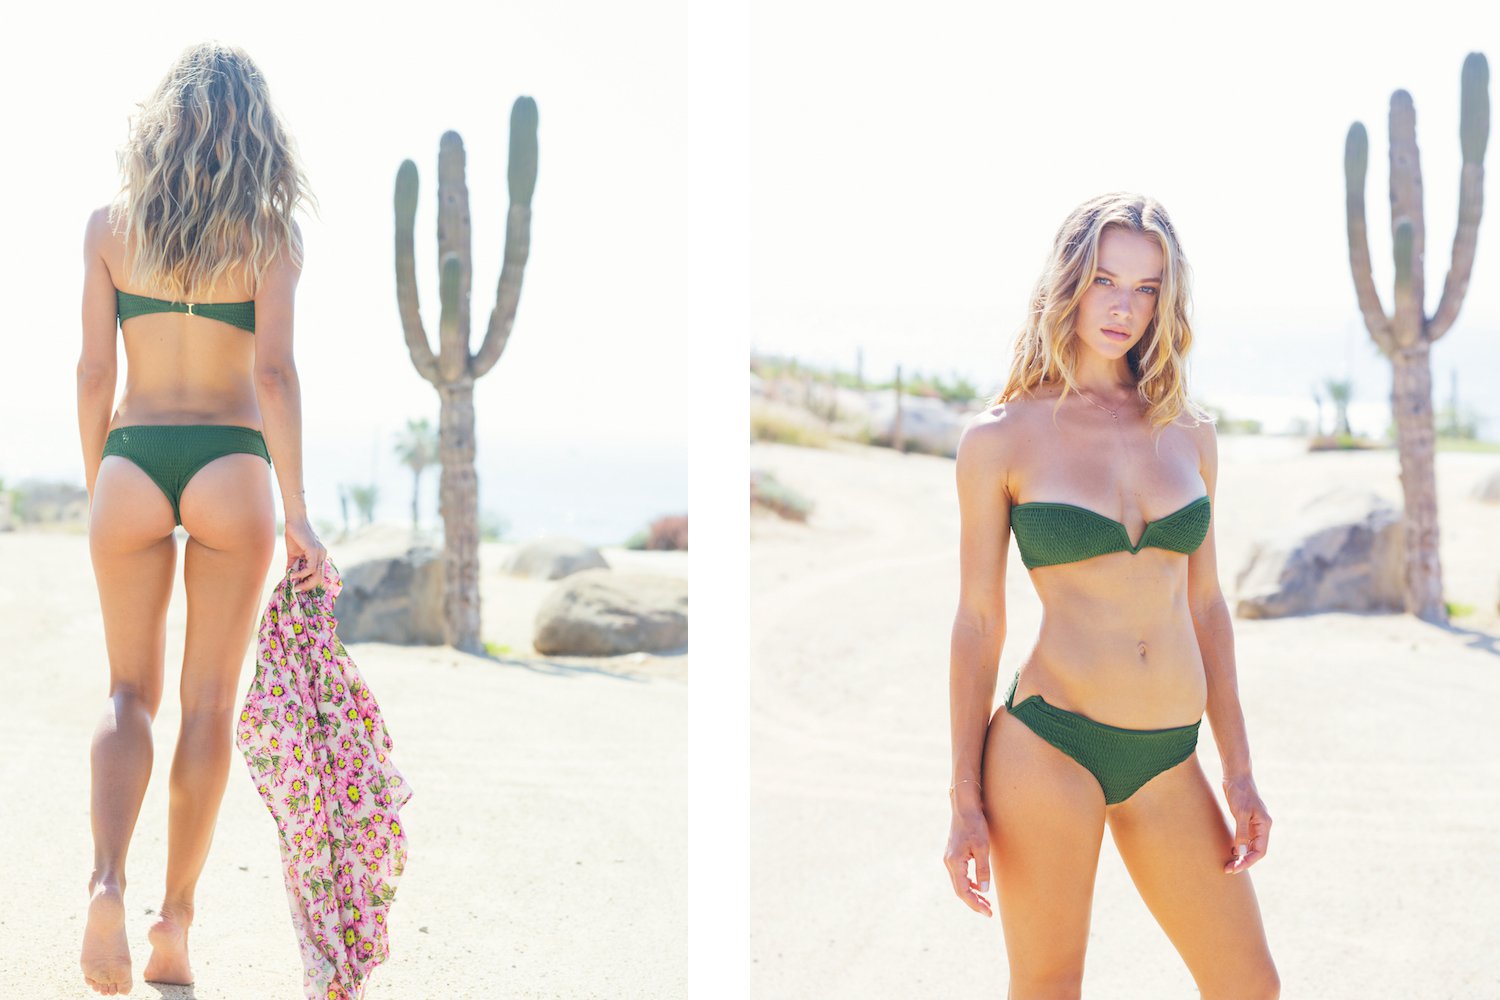 Hannah ferguson - "Tori praver" swimwear photoshoot.